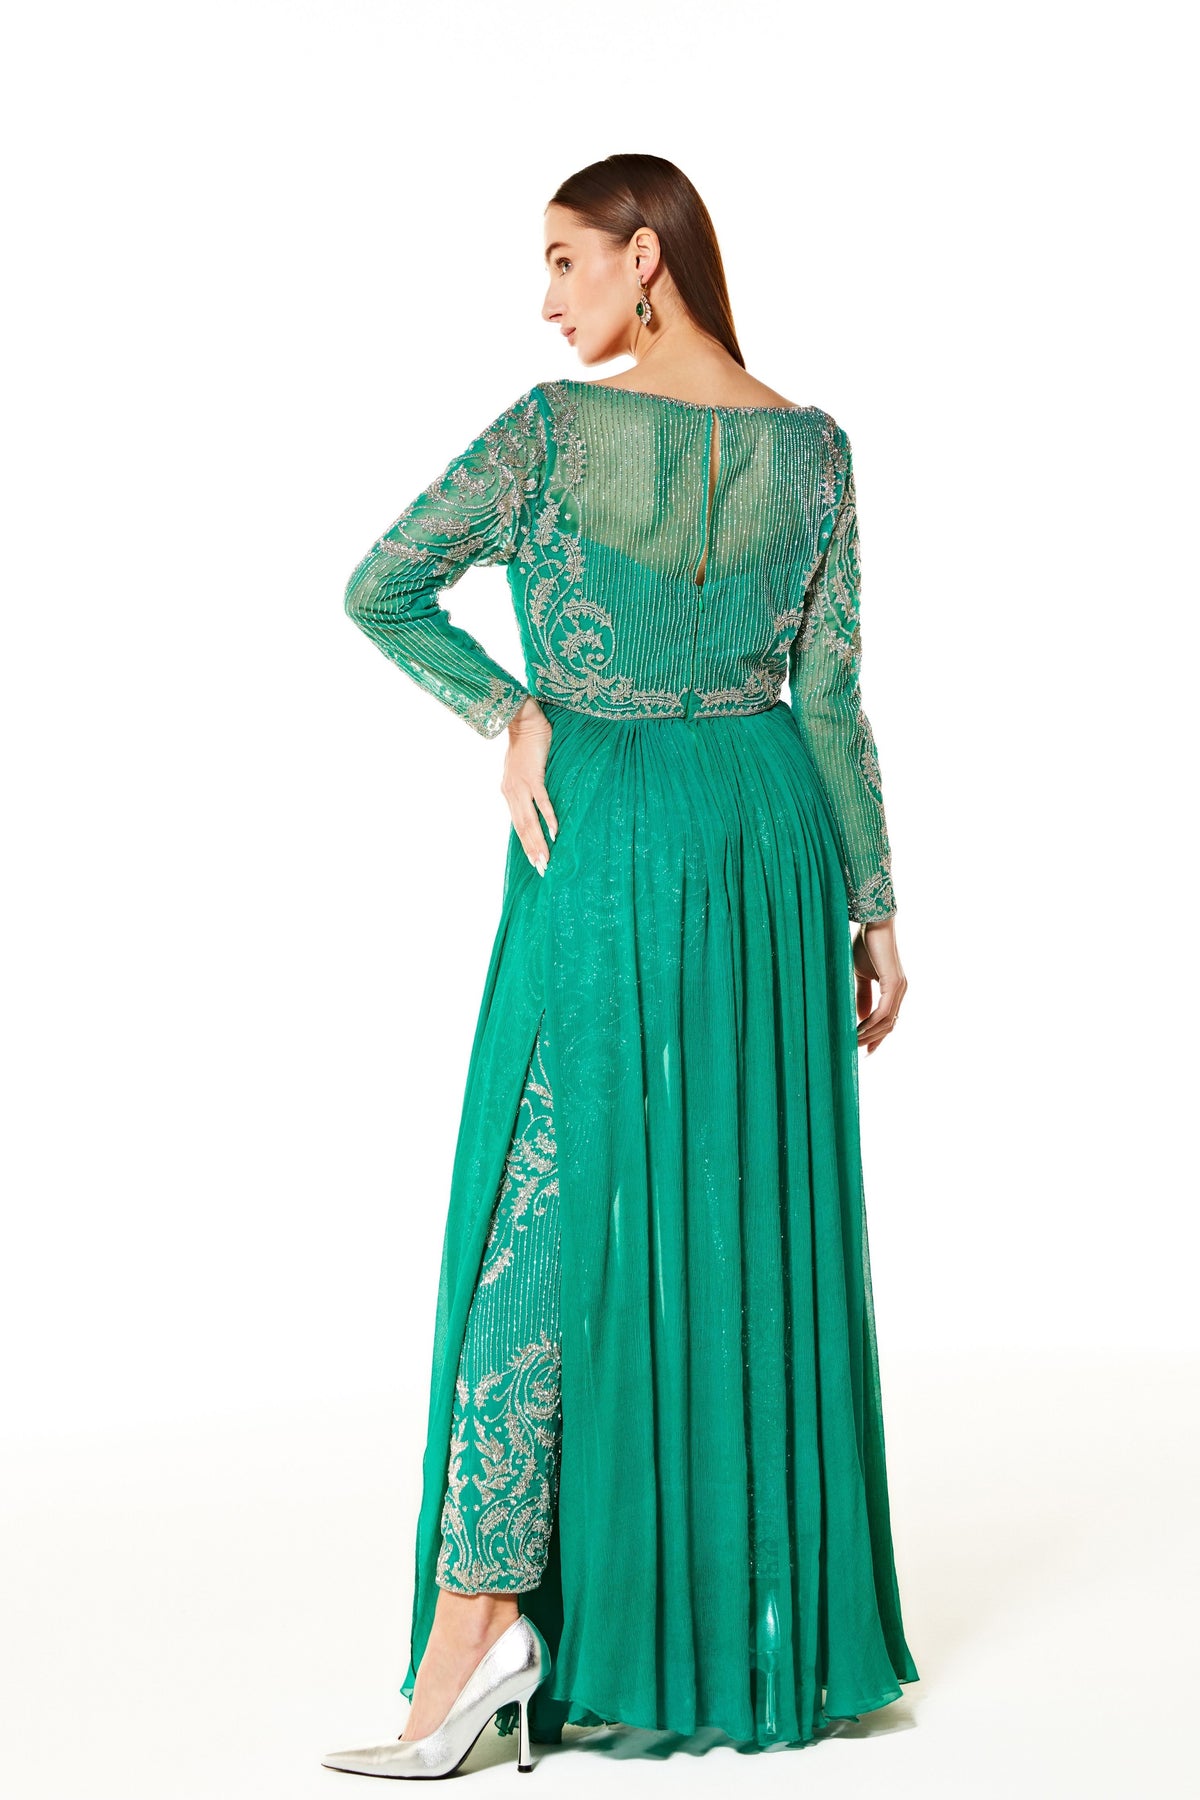 Adah Aqua Green Gown With Pant